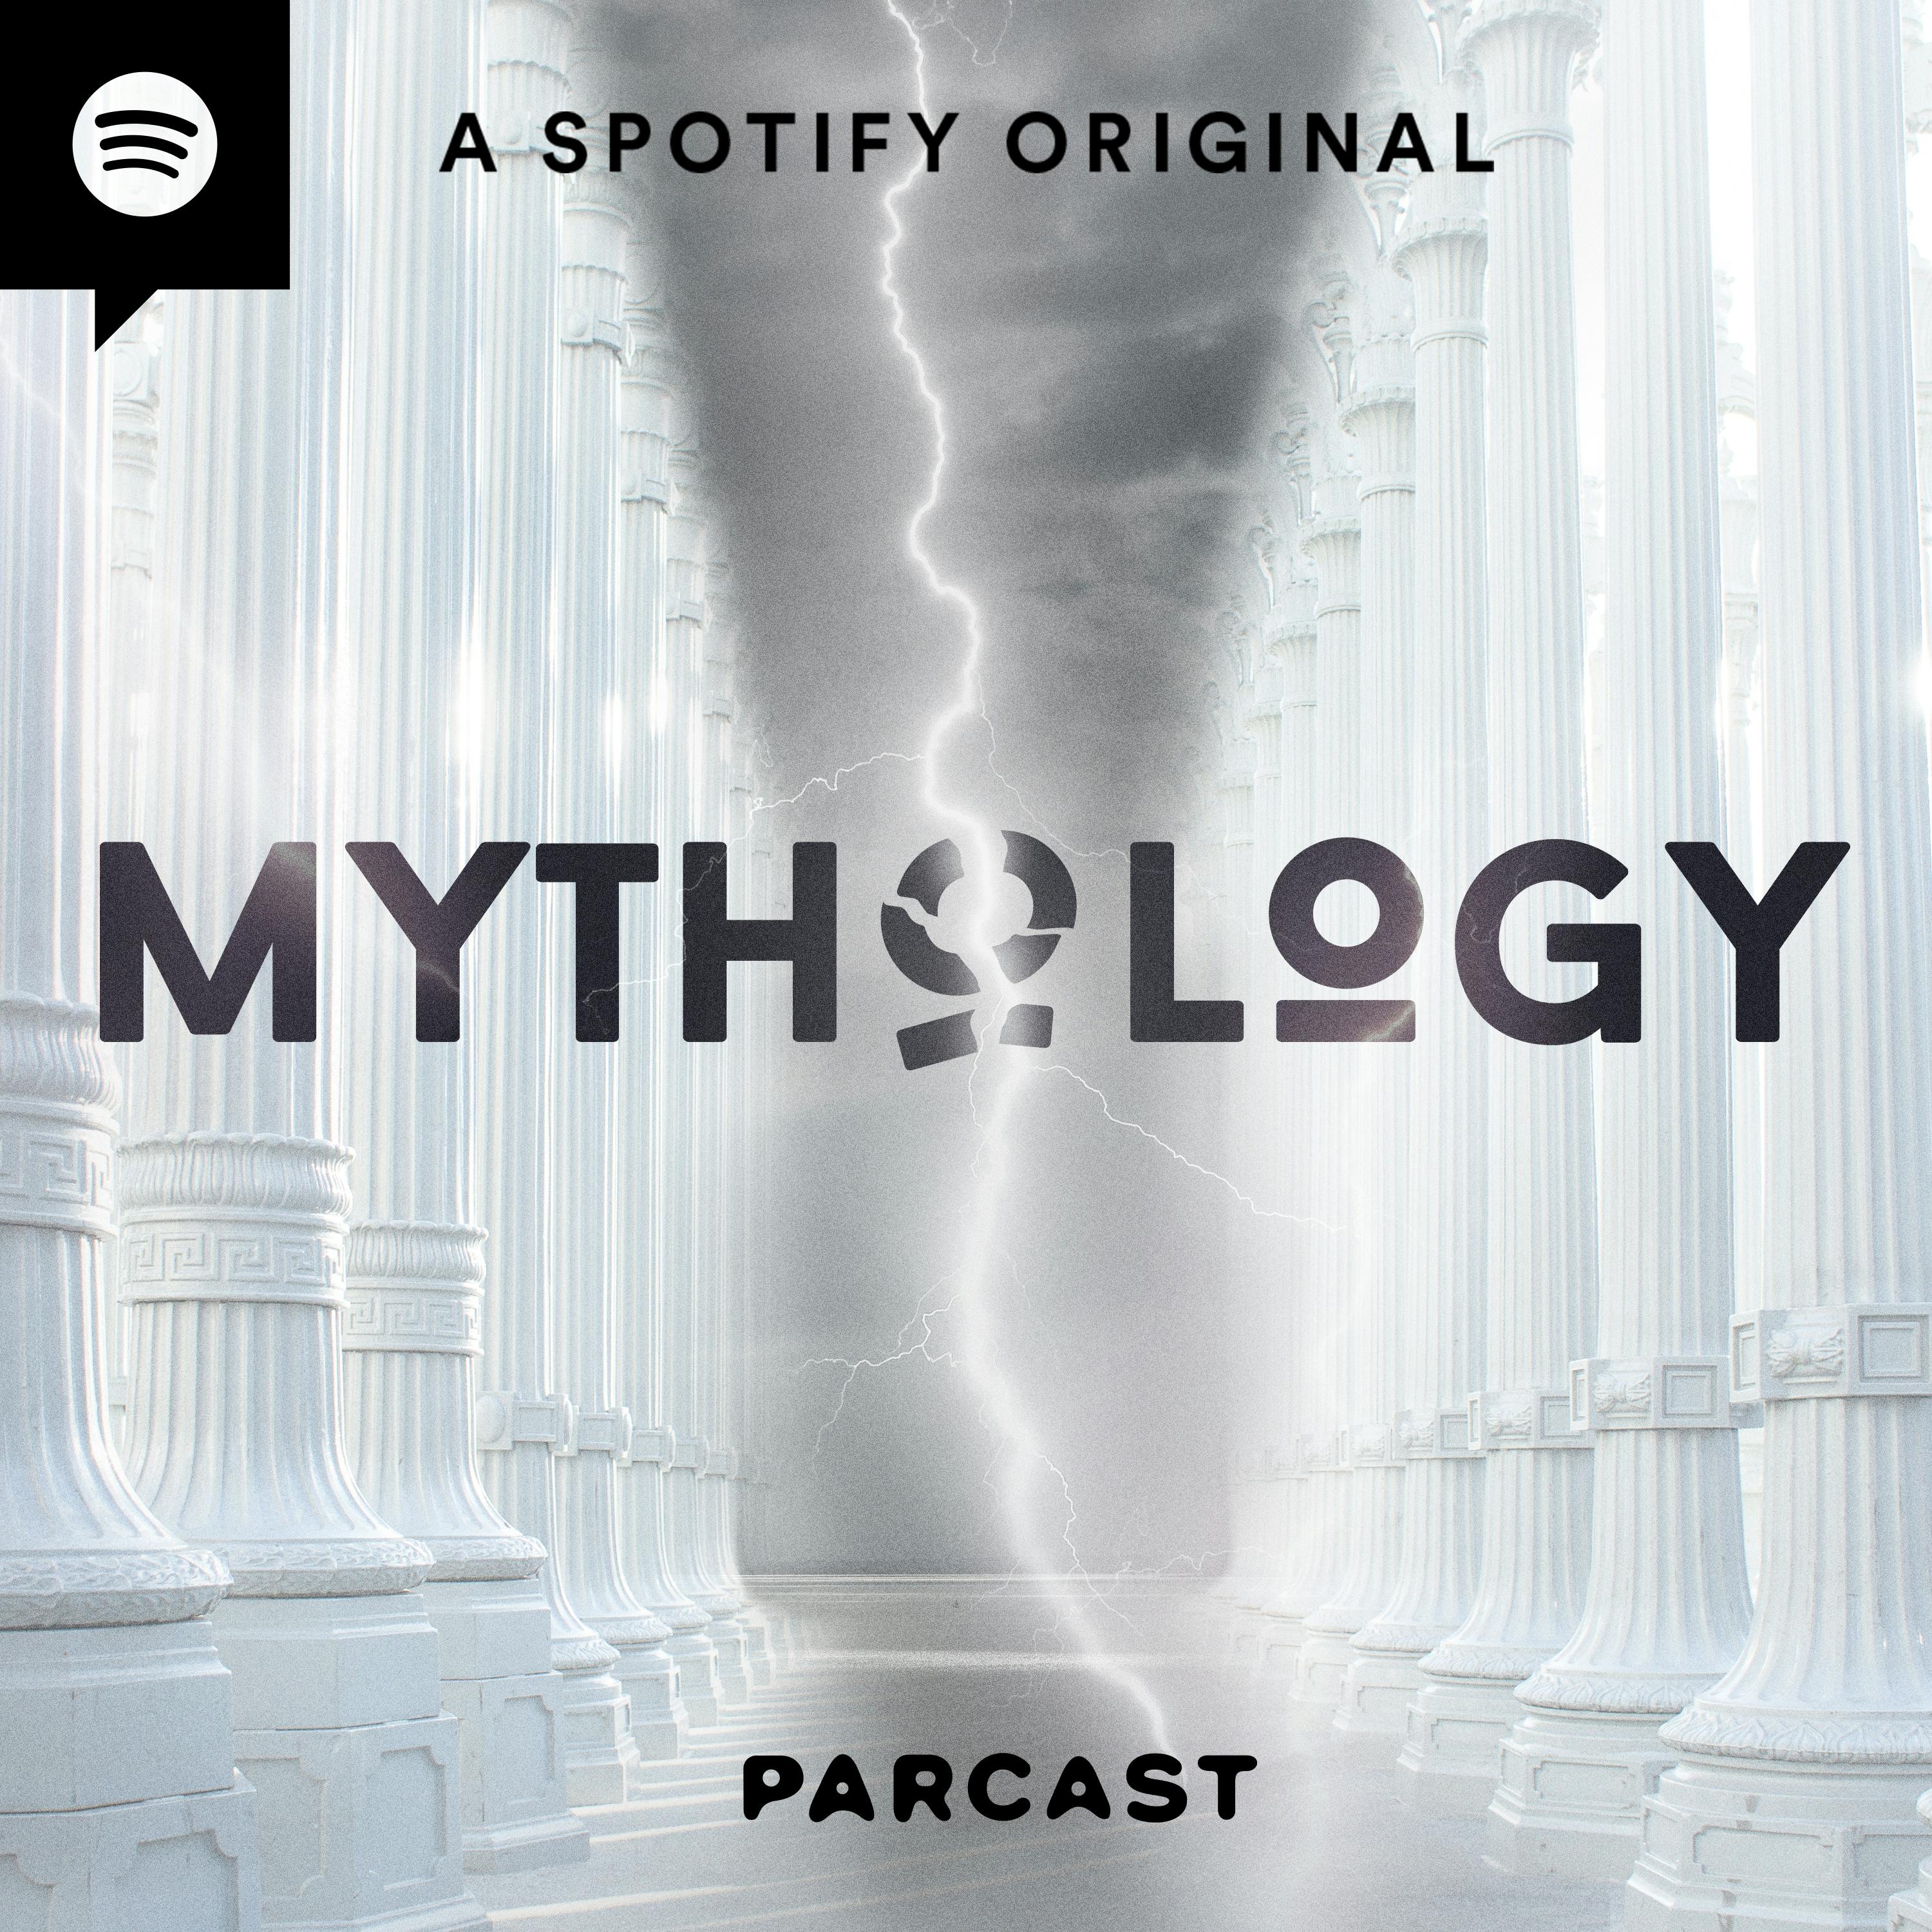 Storia dell'arte  Podcast on Spotify